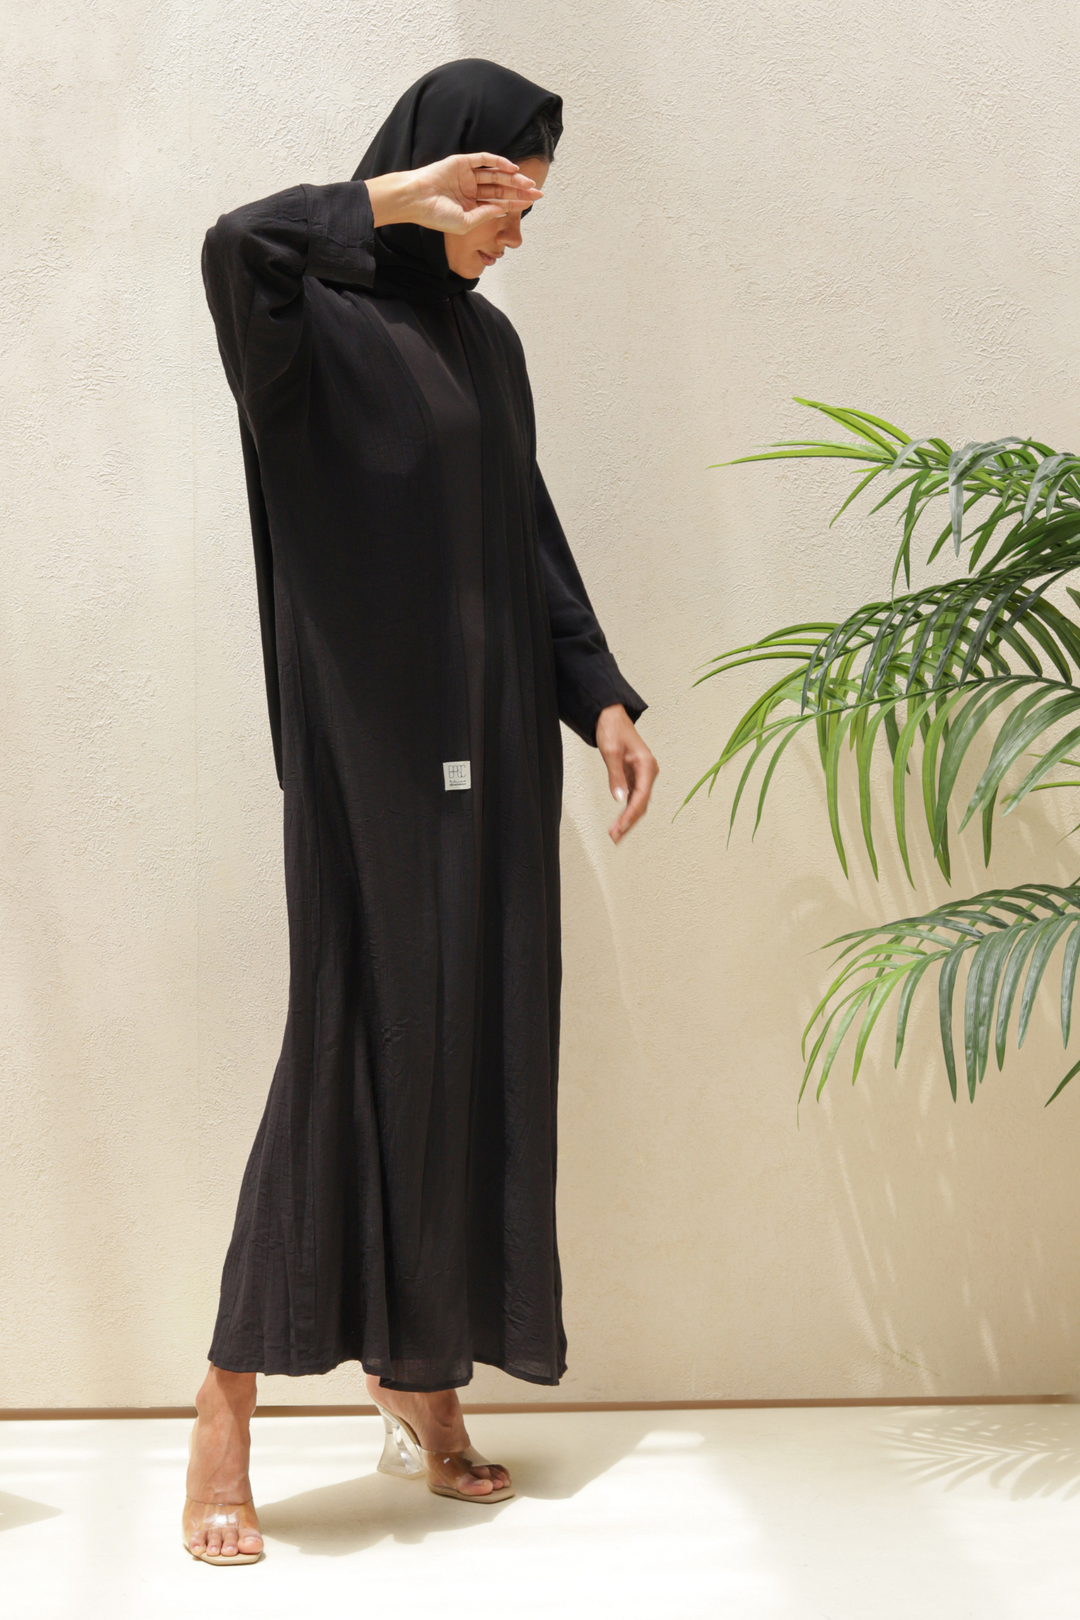 Basic 20 Twenty (Black Abaya)